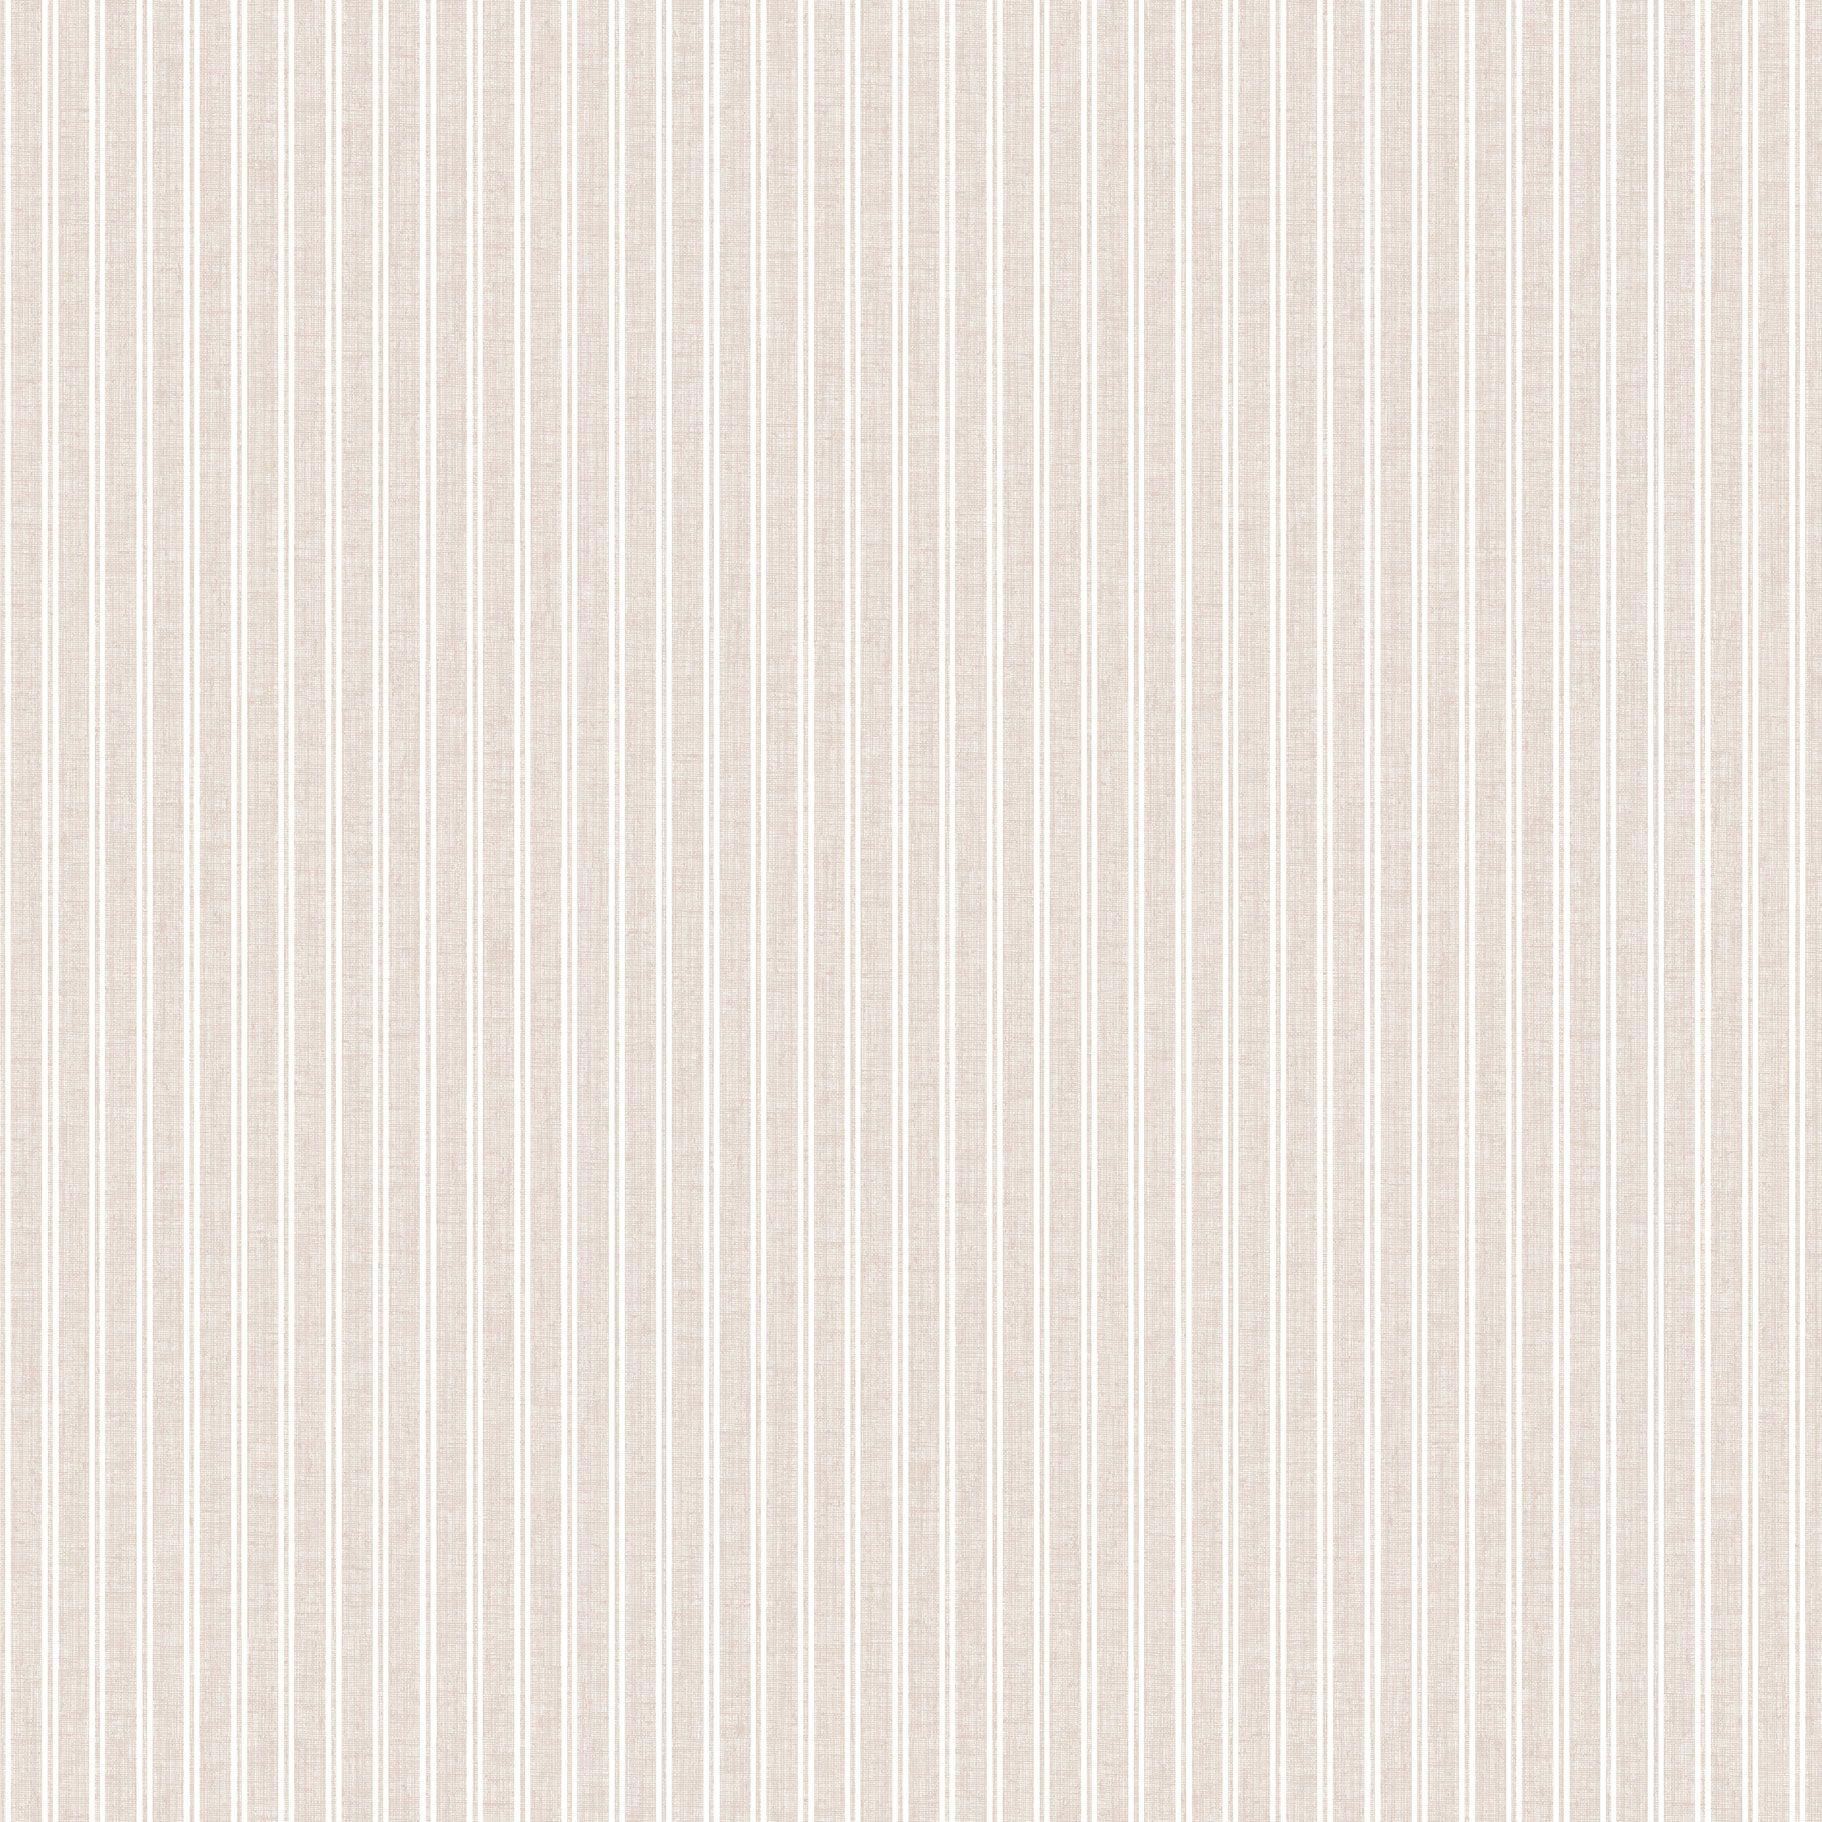 1822 x 1822 · jpeg - New Ticking Stripe Wallpaper - Orange | Striped wallpaper, Striped ...